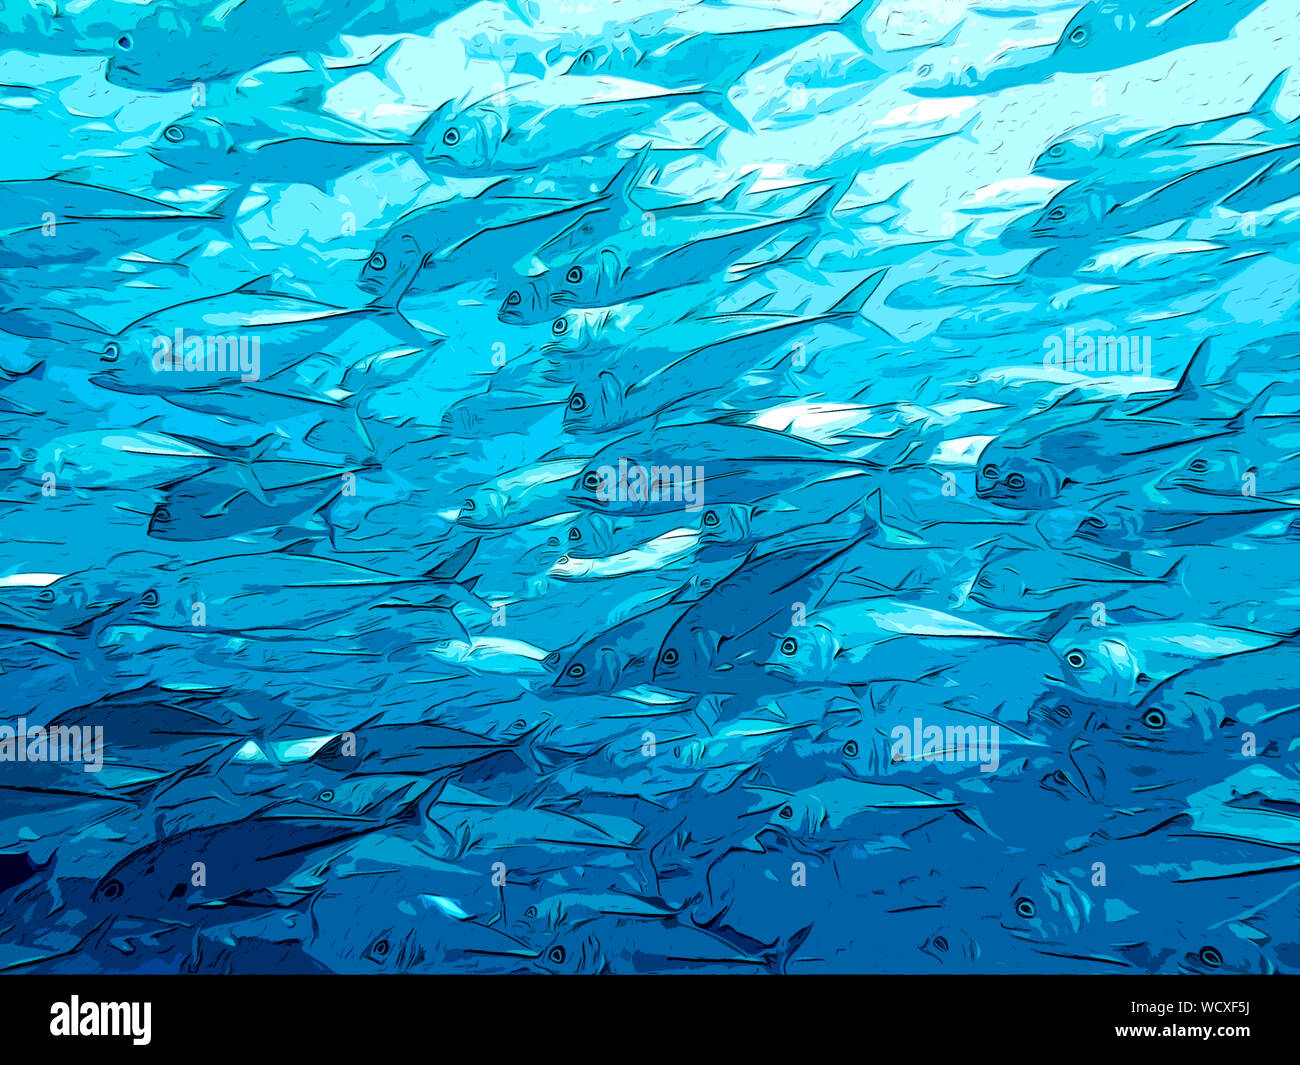 School of Fish, Shoaling and schooling - Underwater Art Illustration Stock Photo